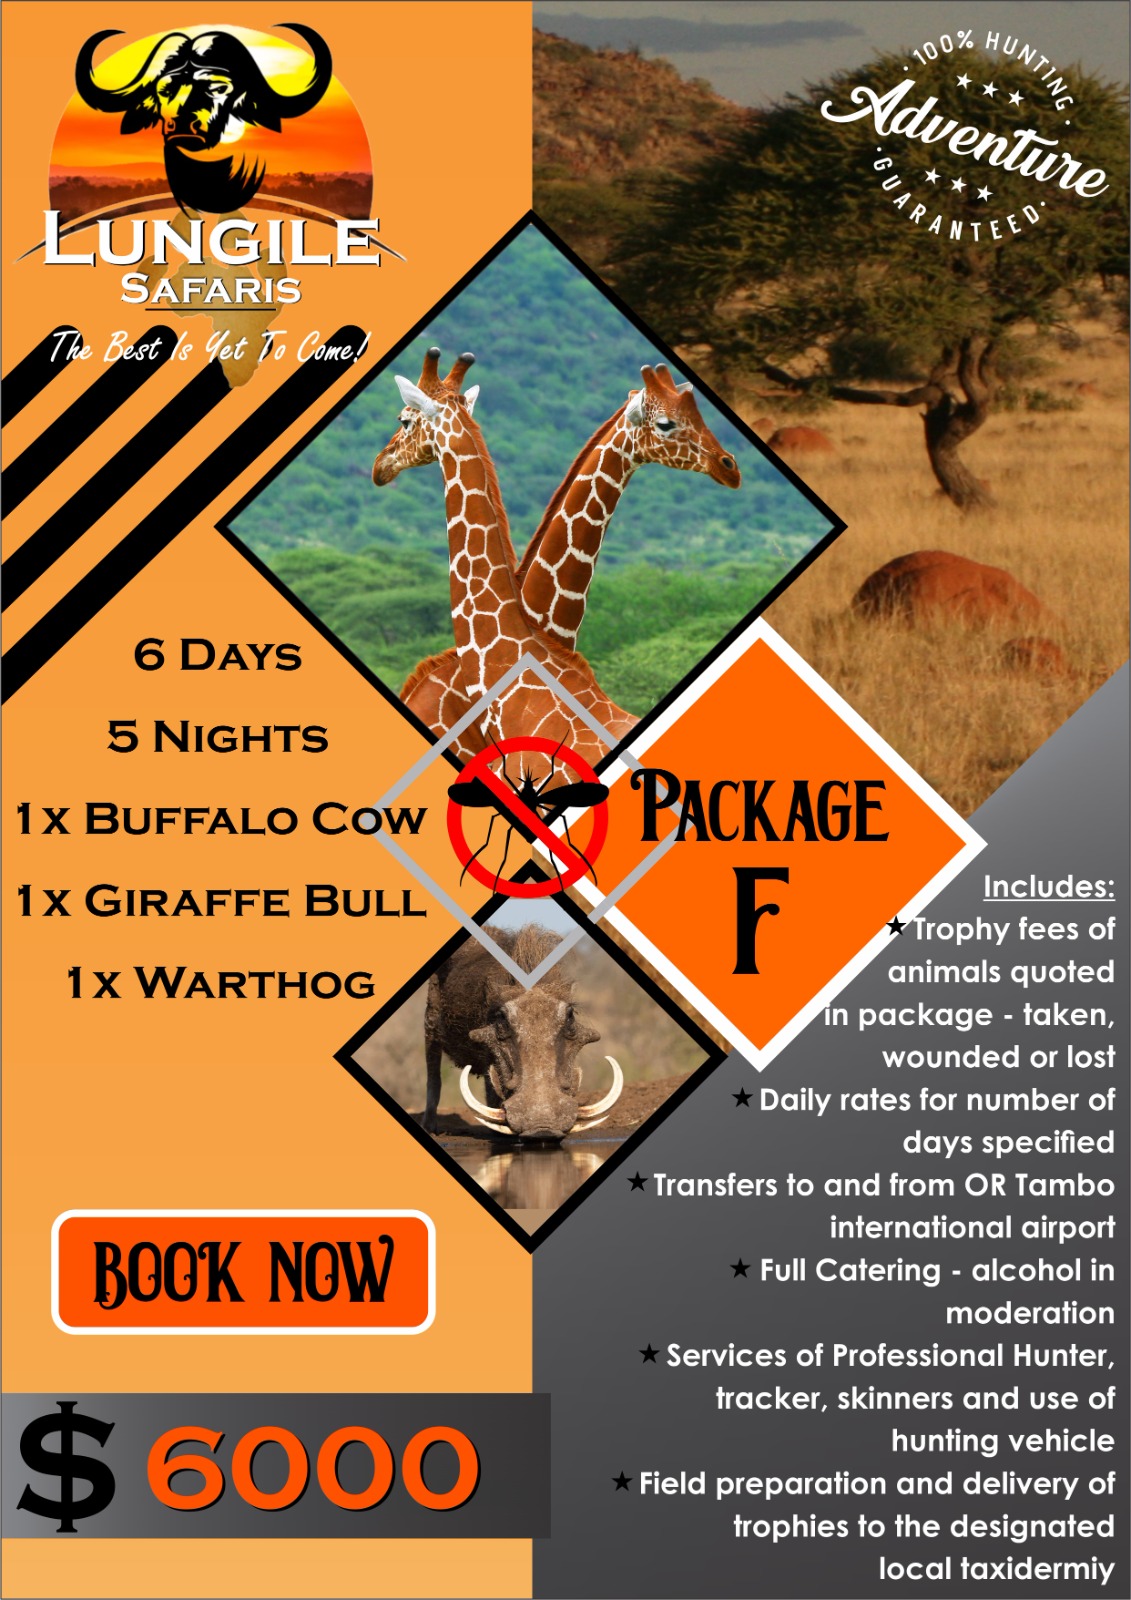 Lungile Safaris Package F